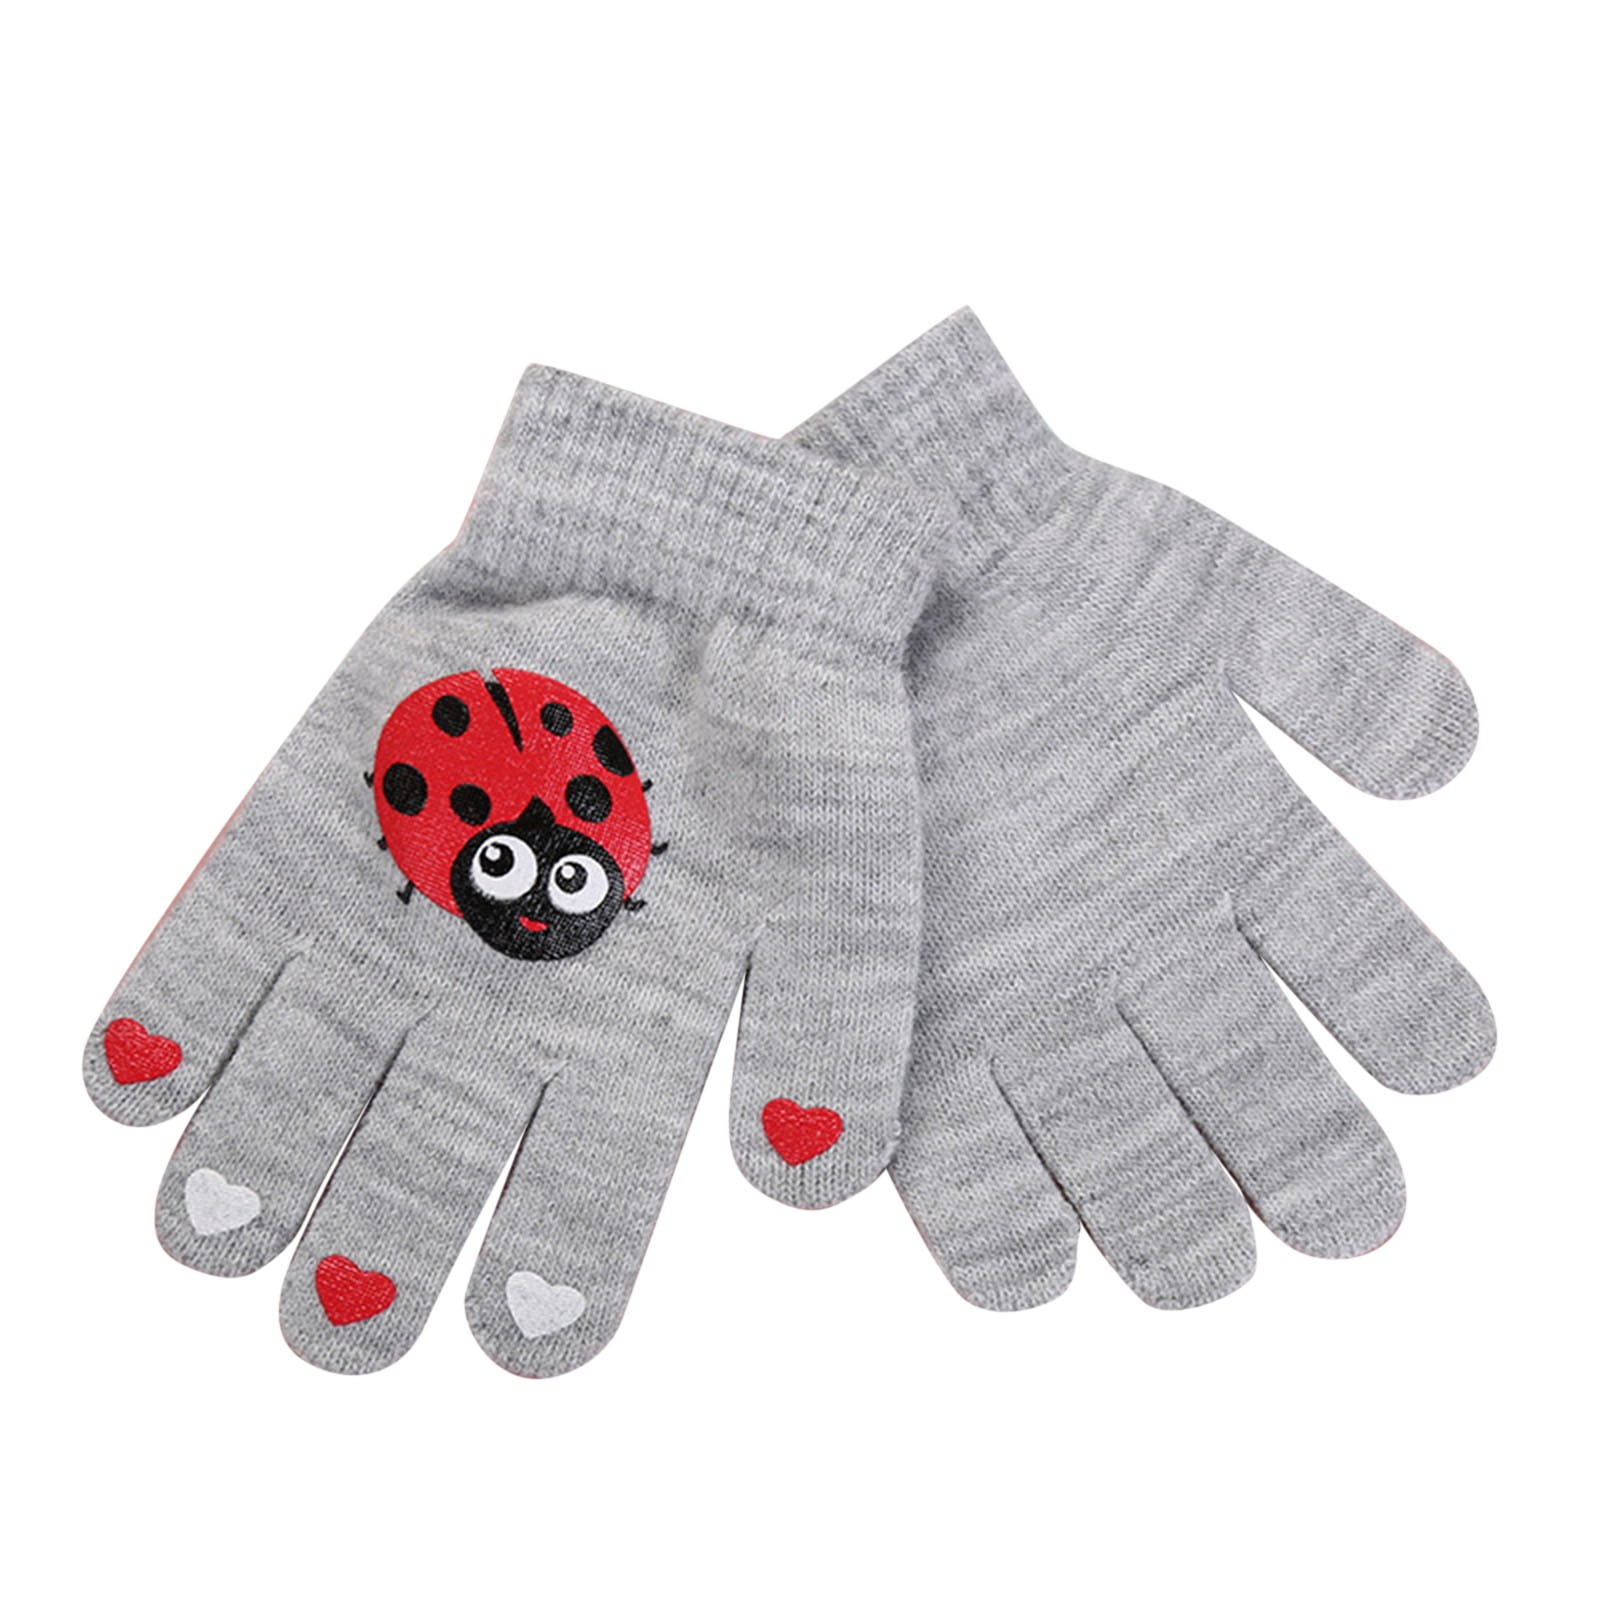 TAIAOJING Kids Winter Fingerless Touchscreen Gloves Fashion Cute Animal  Print Kids Hooded Knit Warm Finger Gloves 